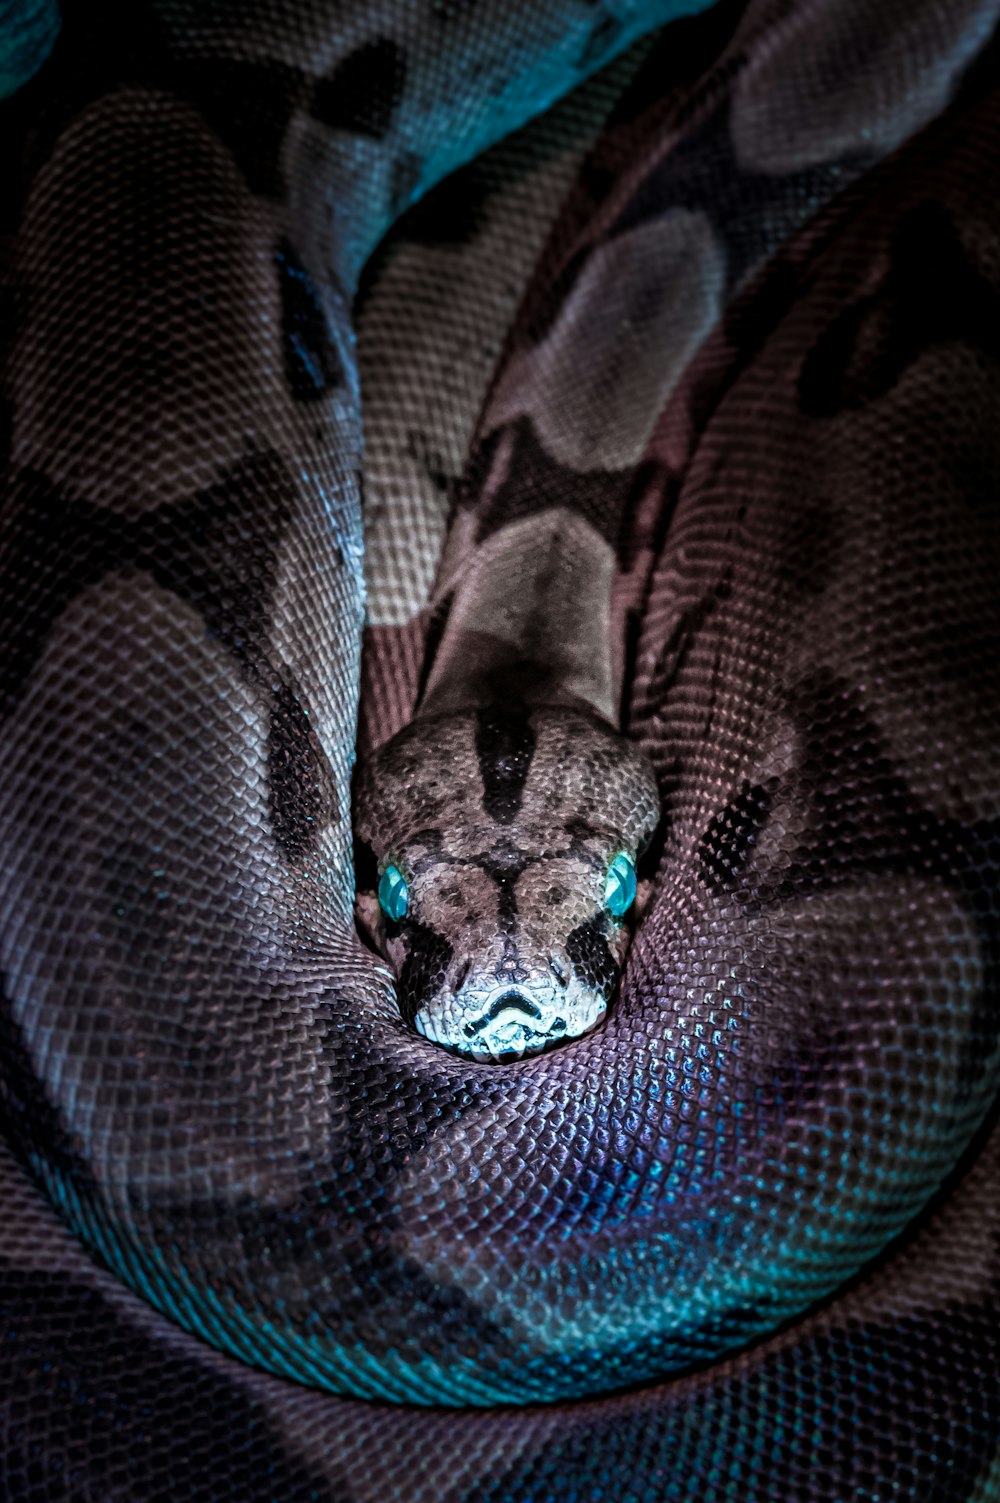 Snake Pictures | Download Free Images on Unsplash